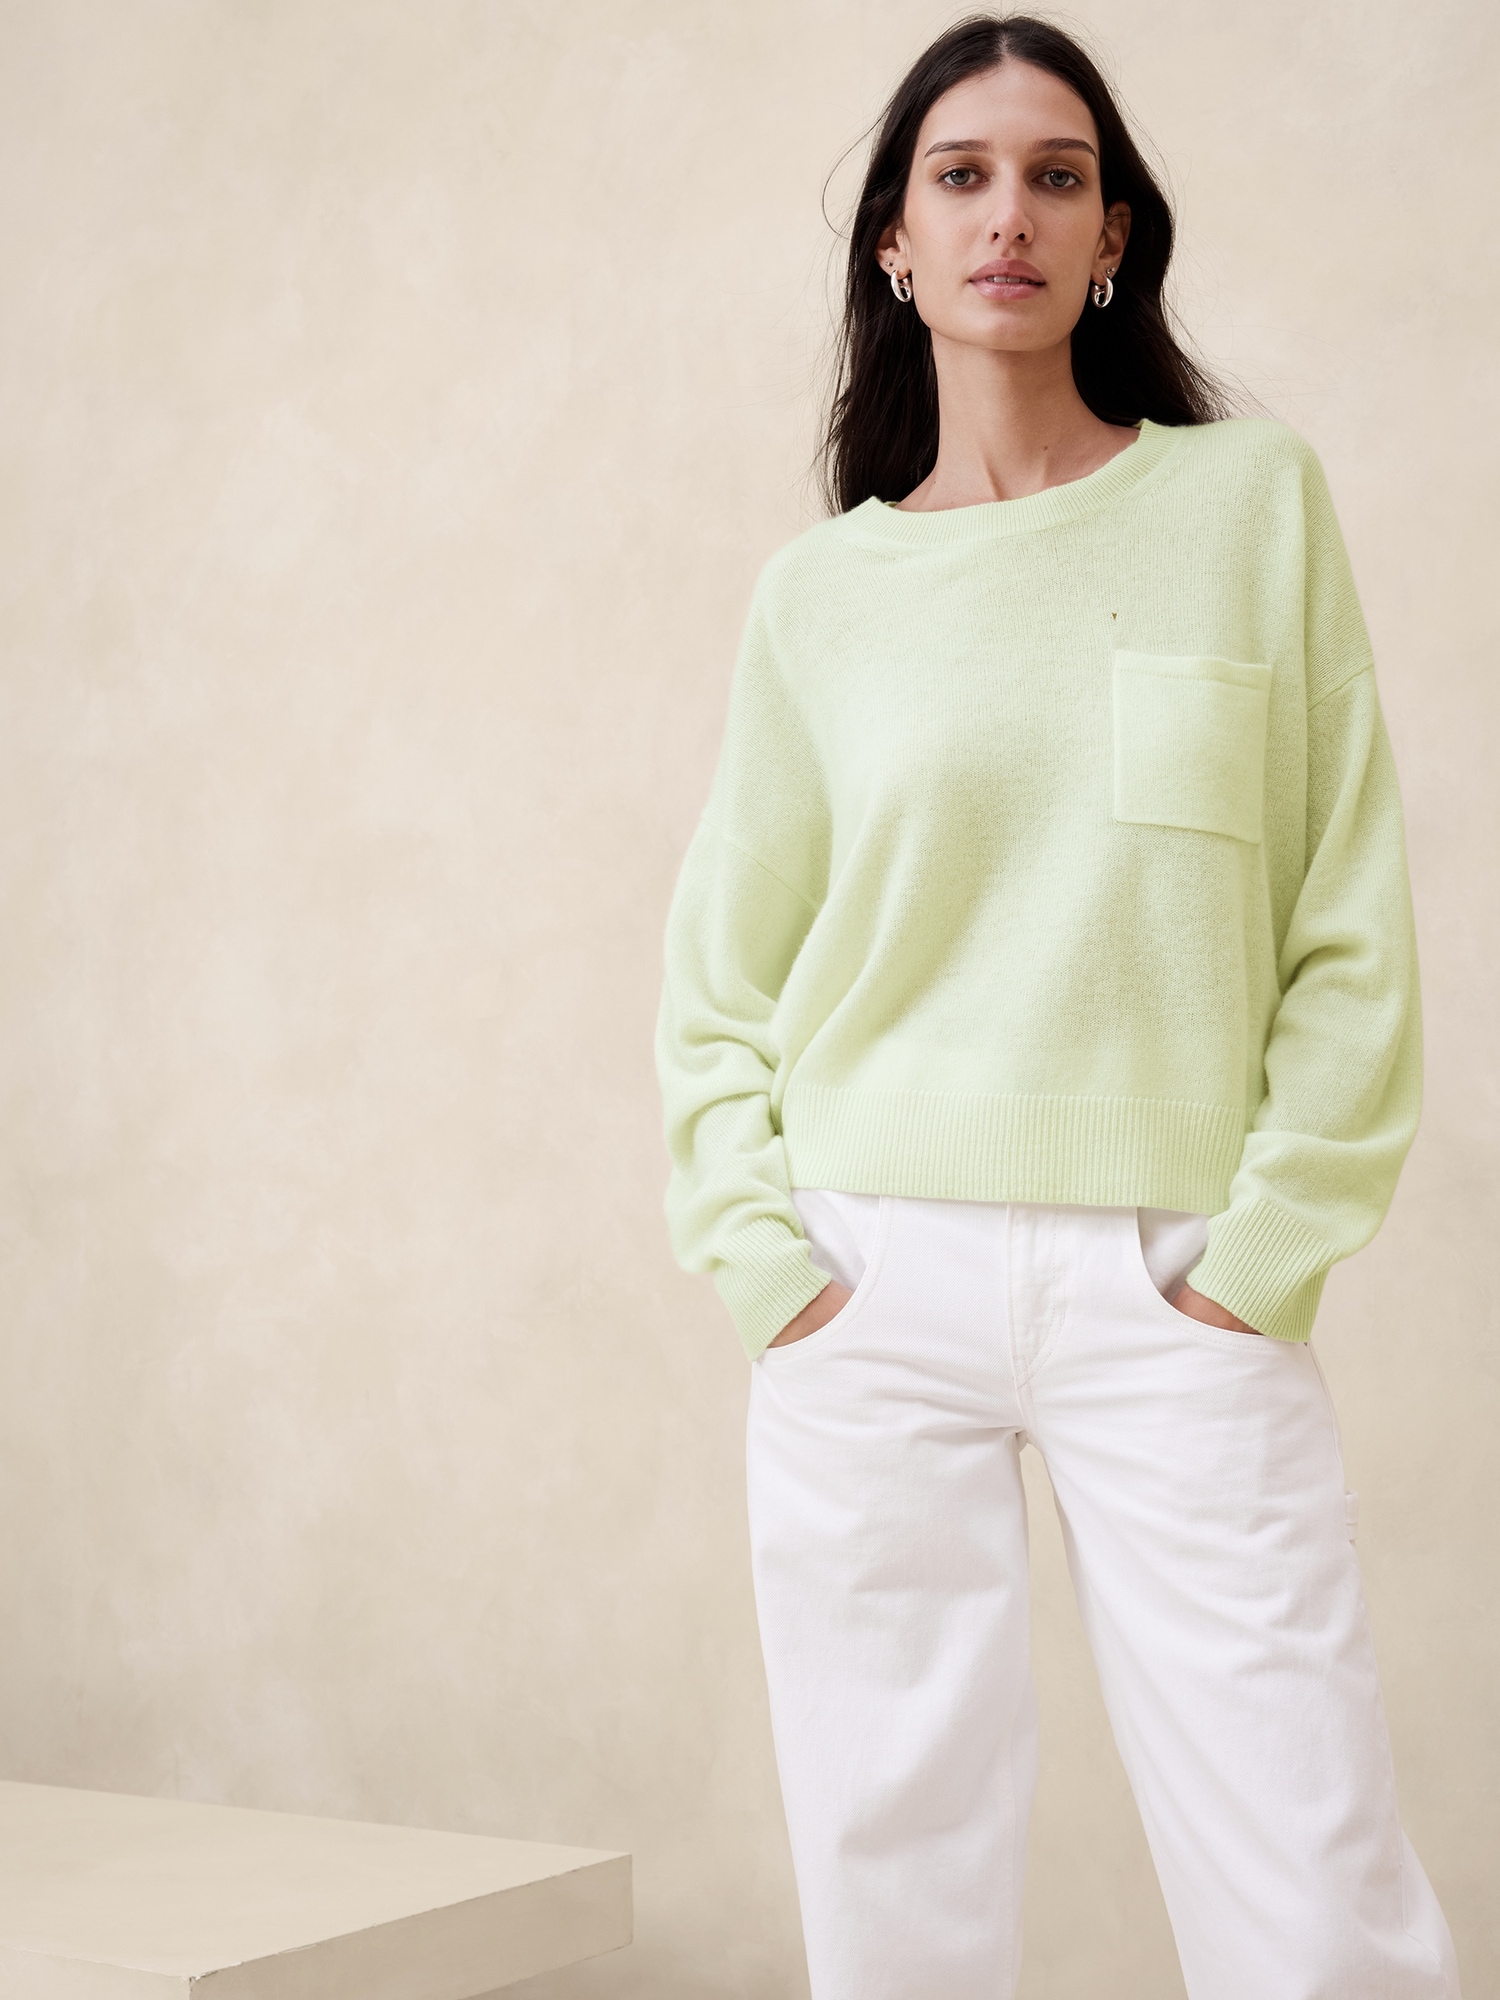 Caro Cropped Lightweight Cashmere Sweater